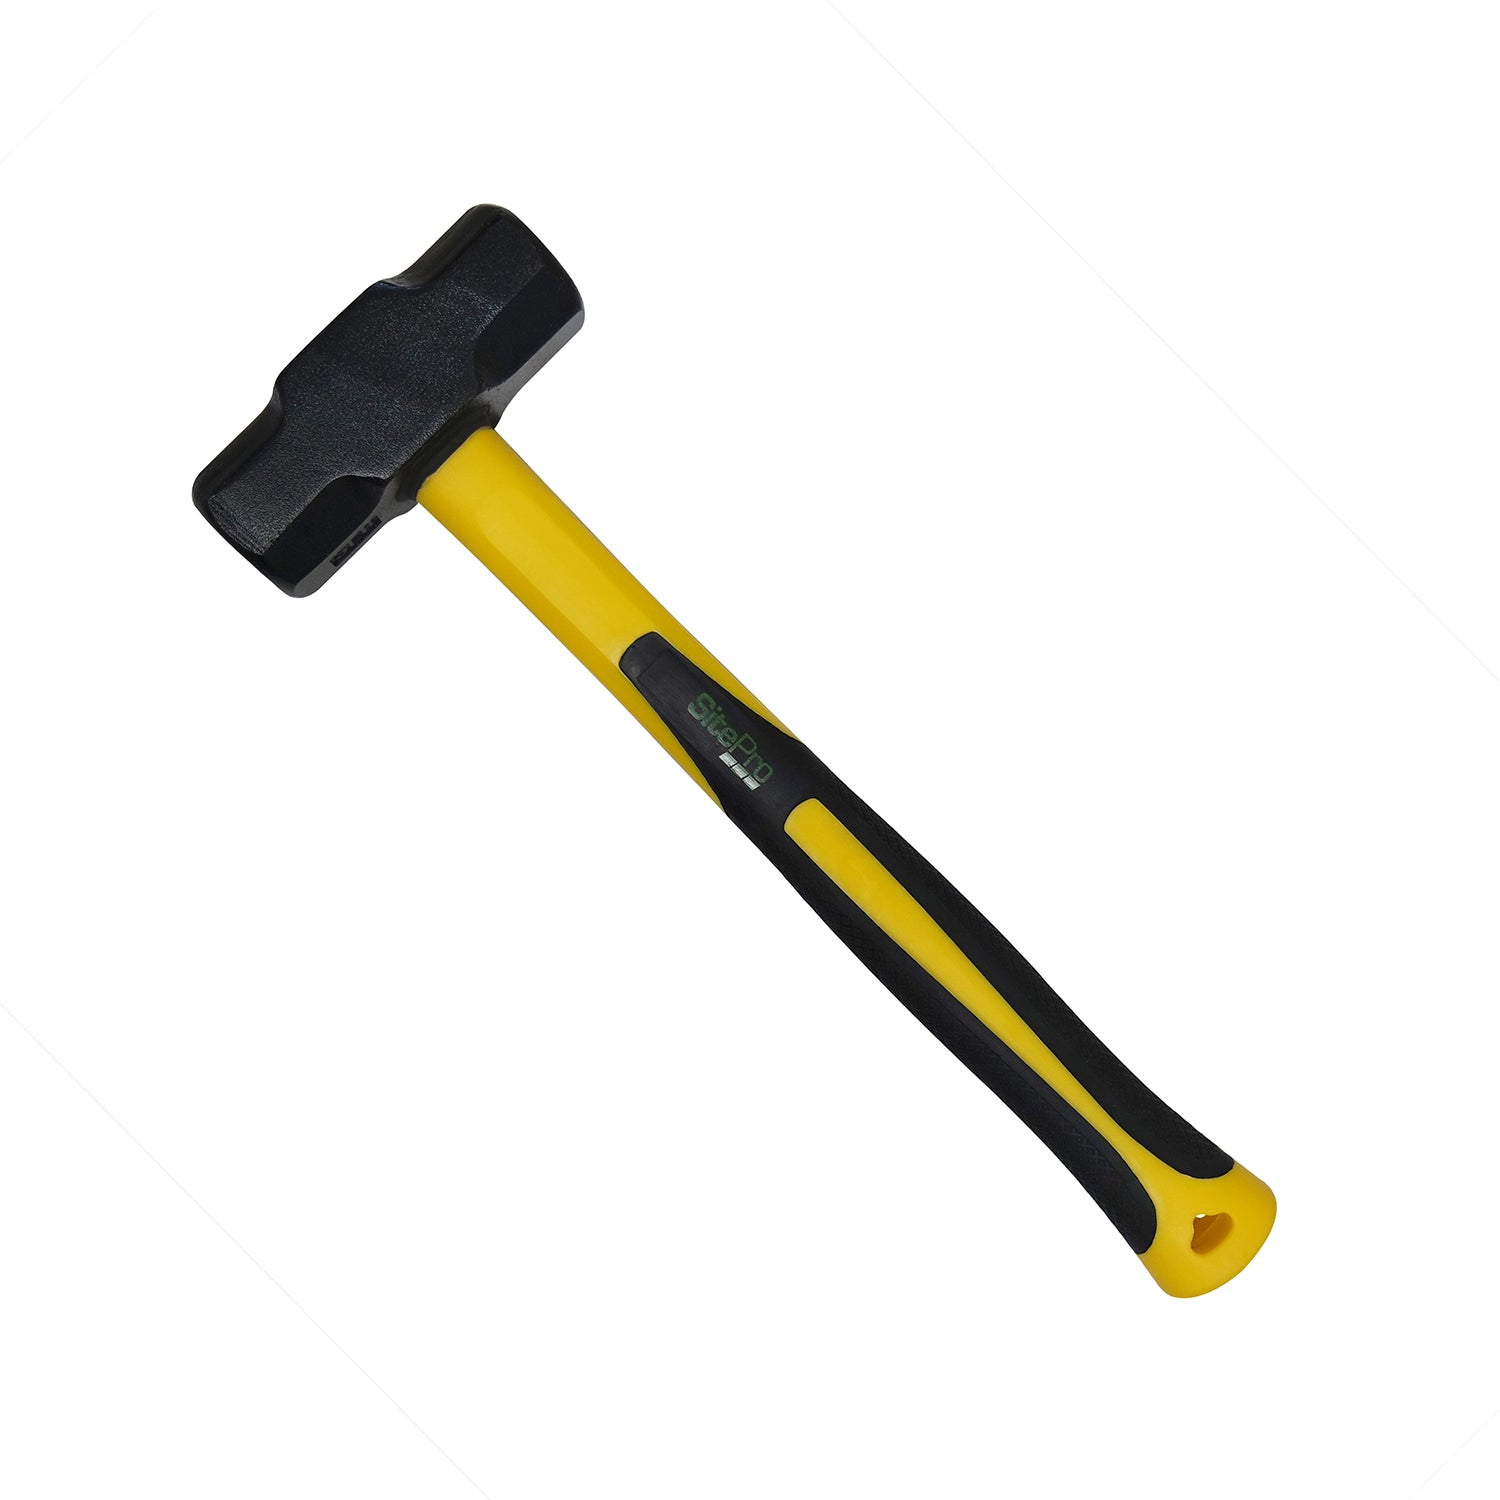 SitePro Engineer's Hammer -Hand Tools- eGPS Solutions Inc.